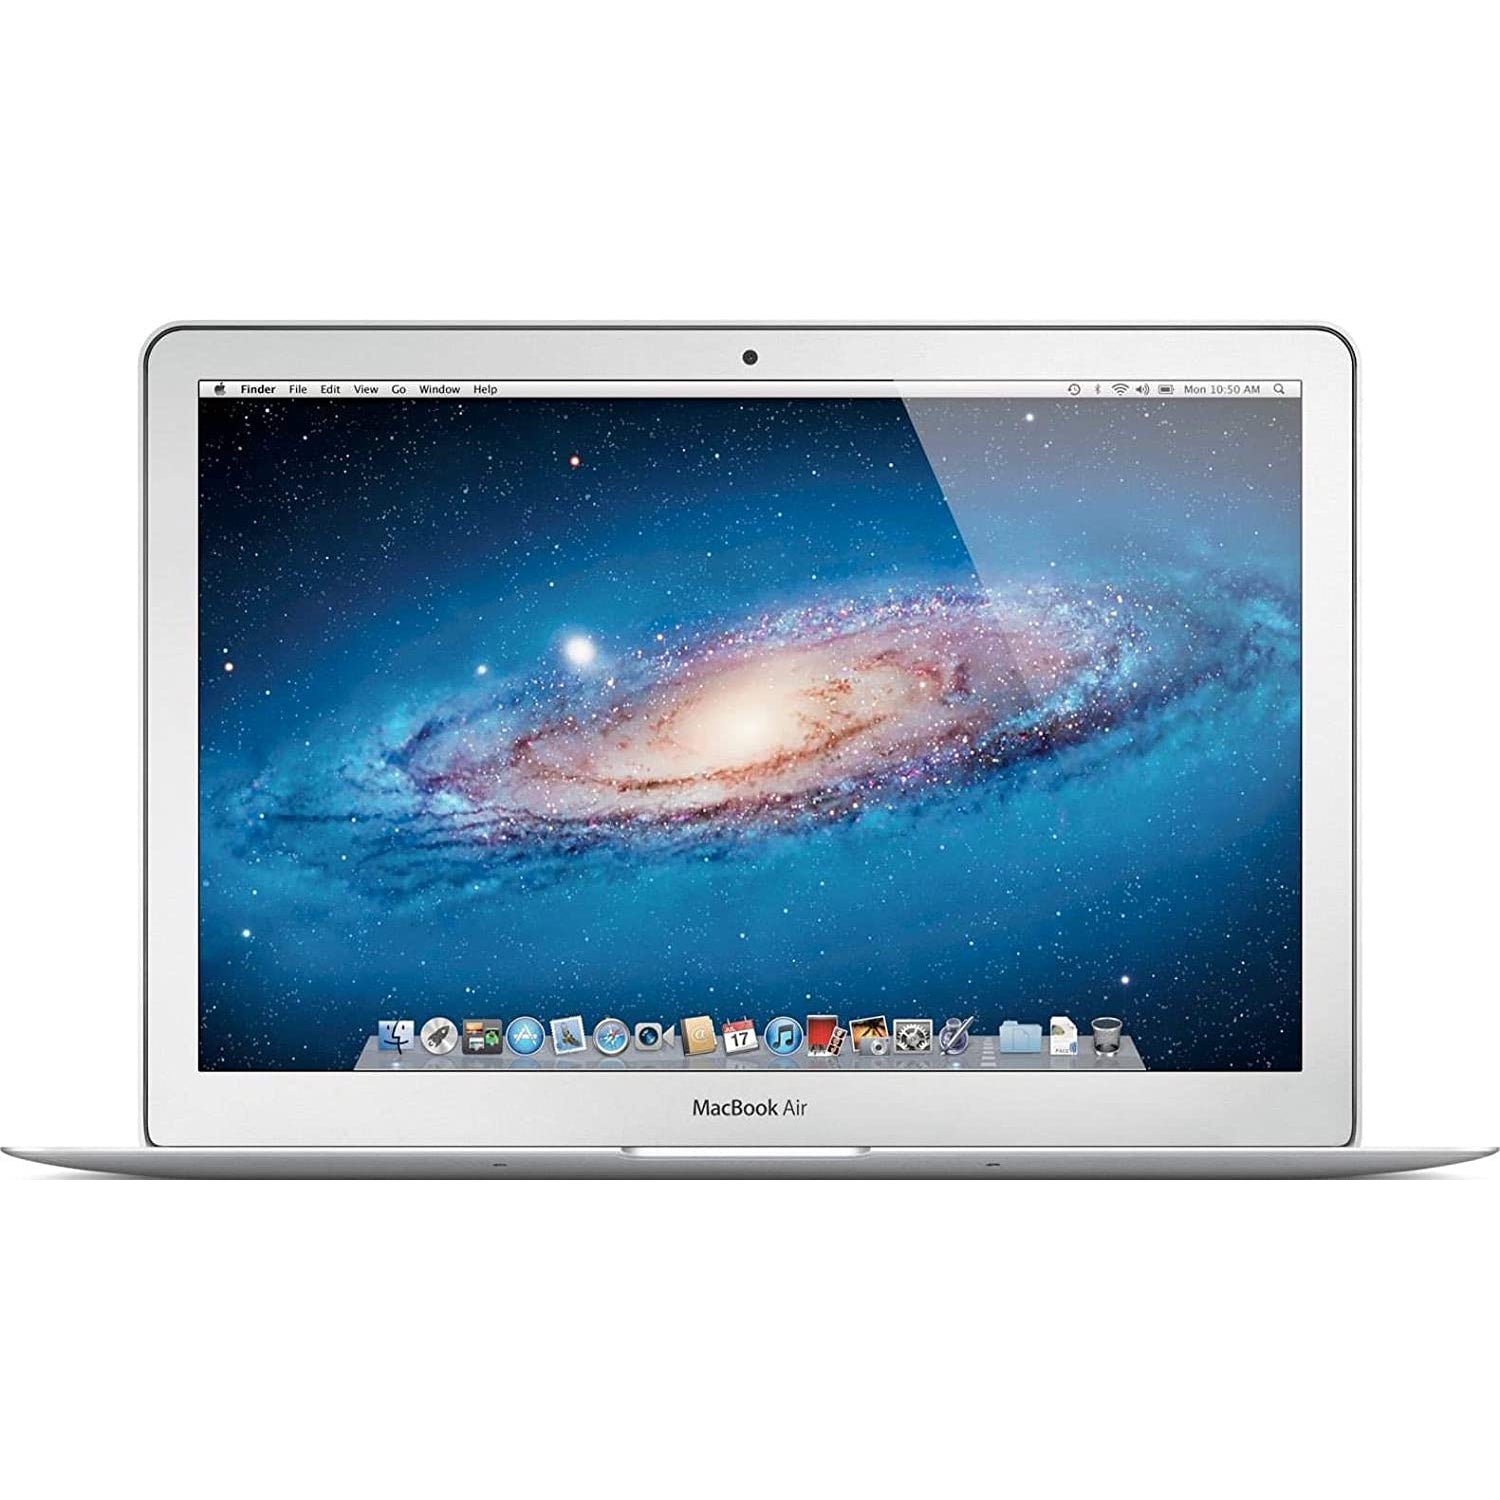 Apple MacBook Air 13.3'' MD231LL/A (2012) Laptop, Intel Core i5, 4GB RAM, 256GB, Silver